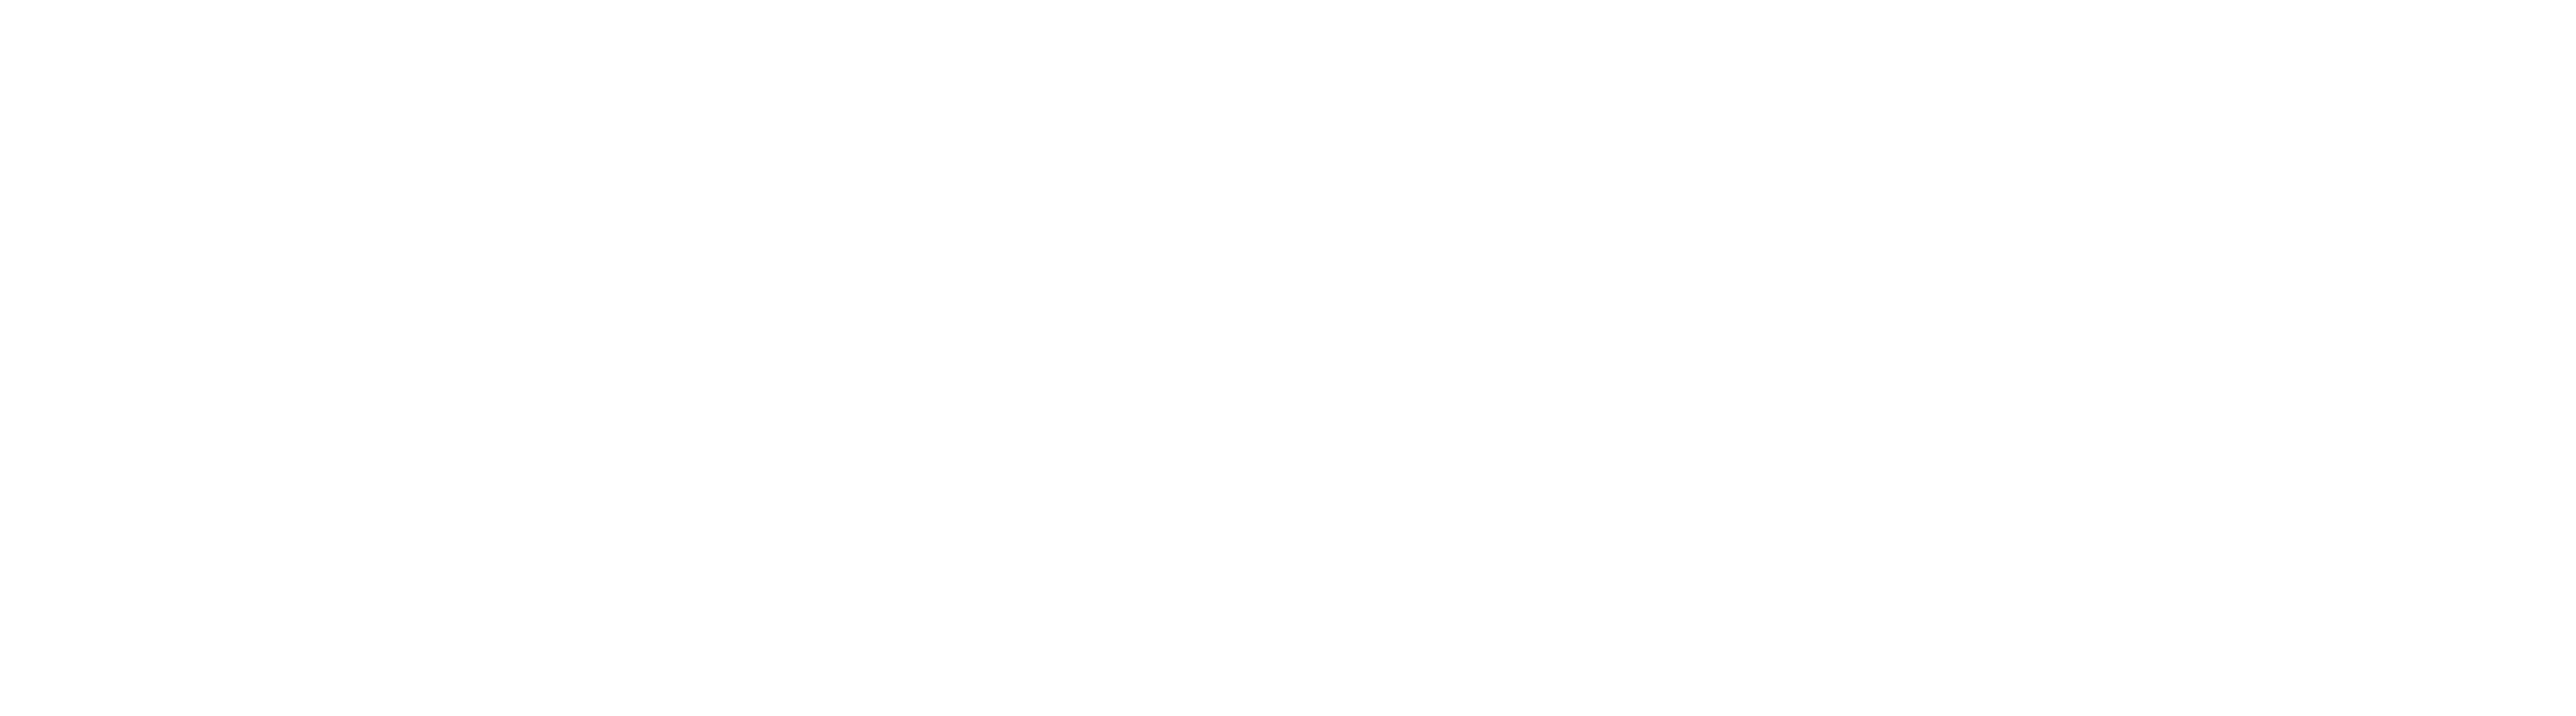 ZeusProtocol